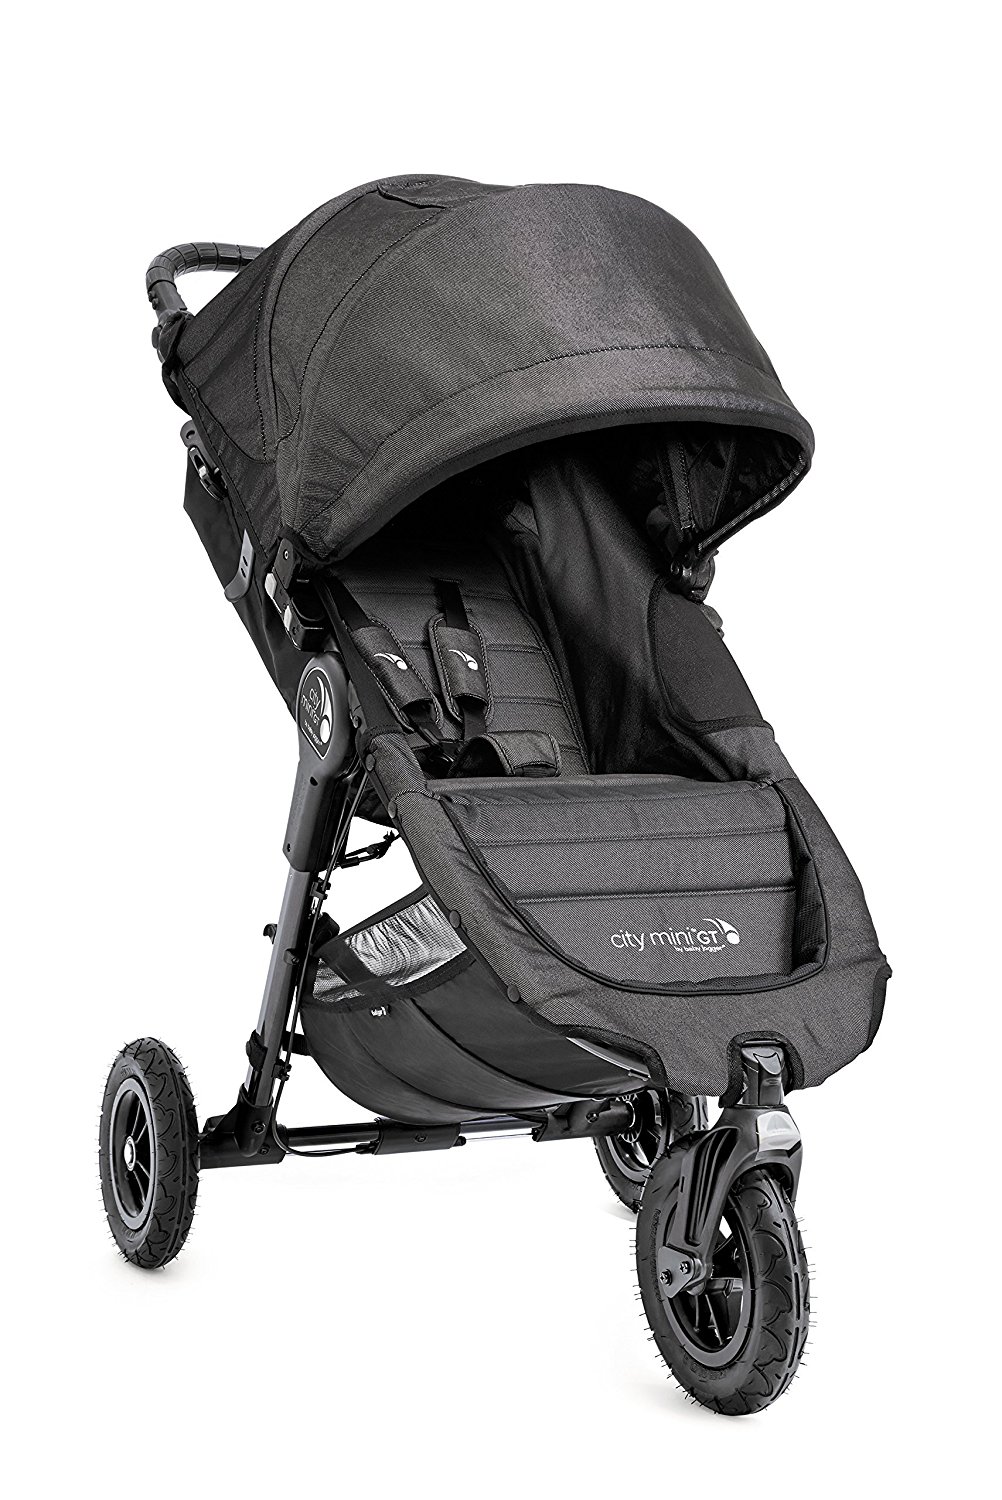 Baby Jogger City Mini GT Single Stroller (Charcoal Denim)